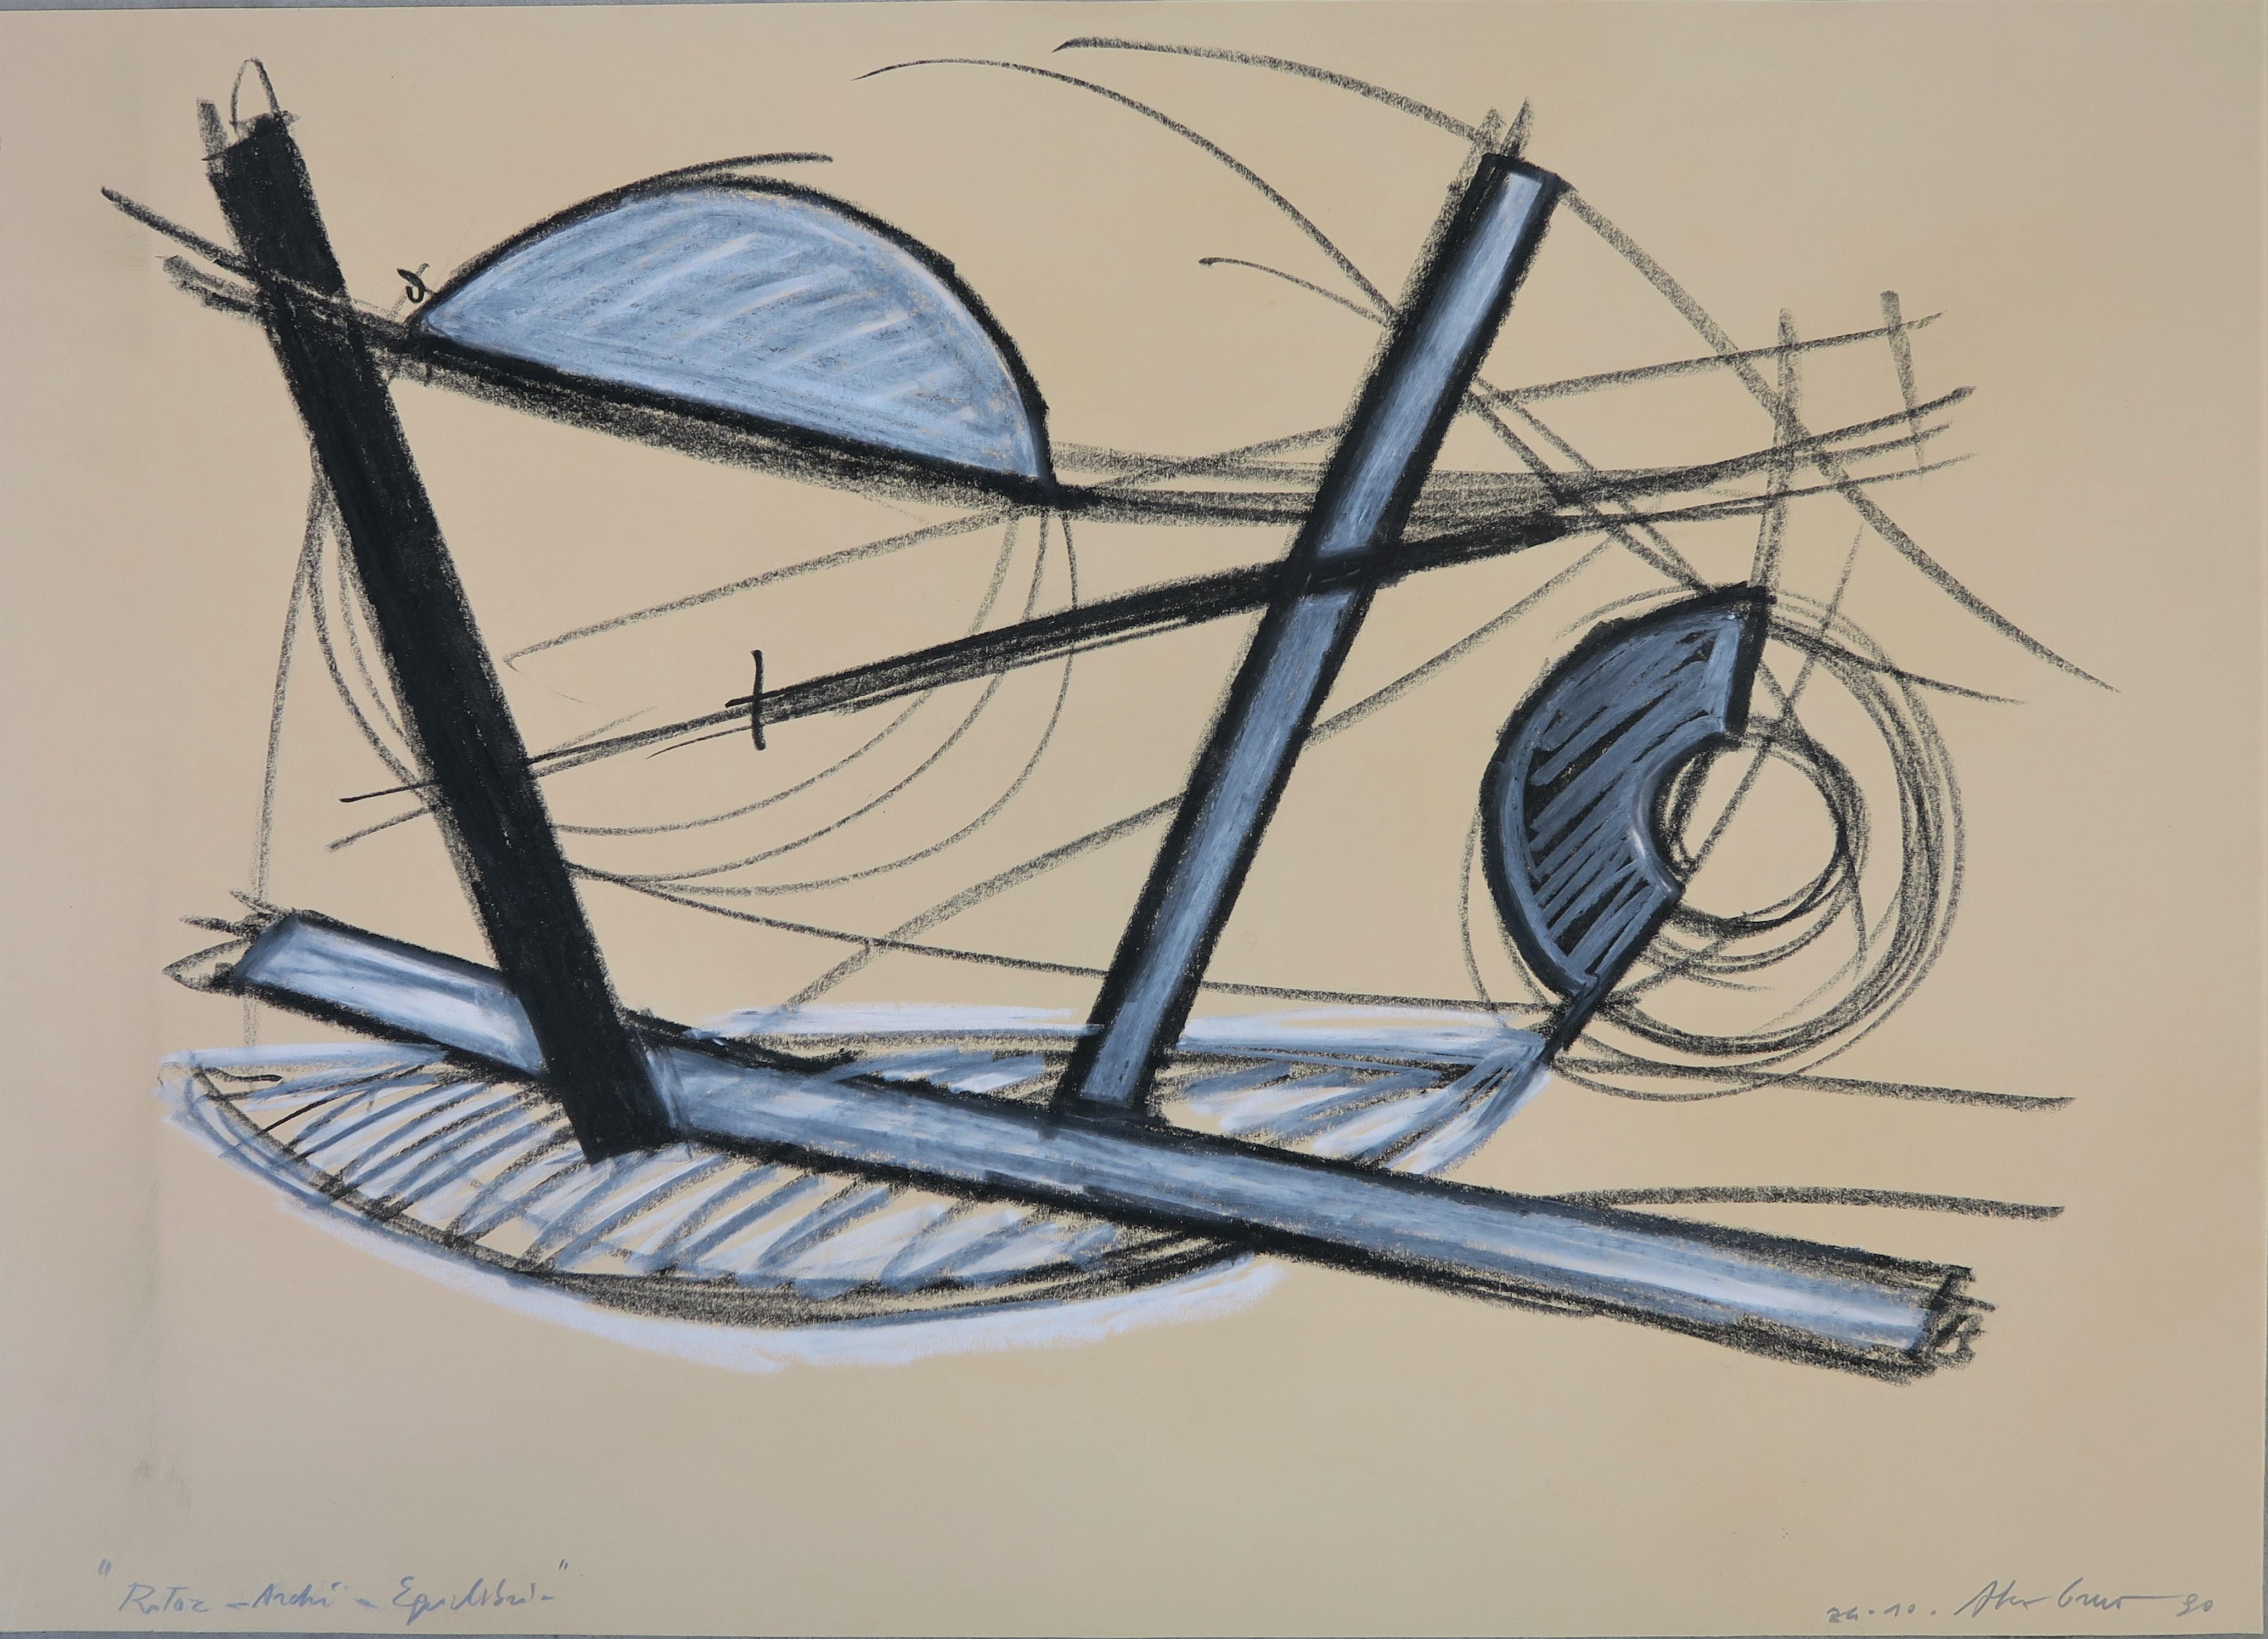 Alex Corno Abstract Drawing - Rotor-Archi-Equilibrio